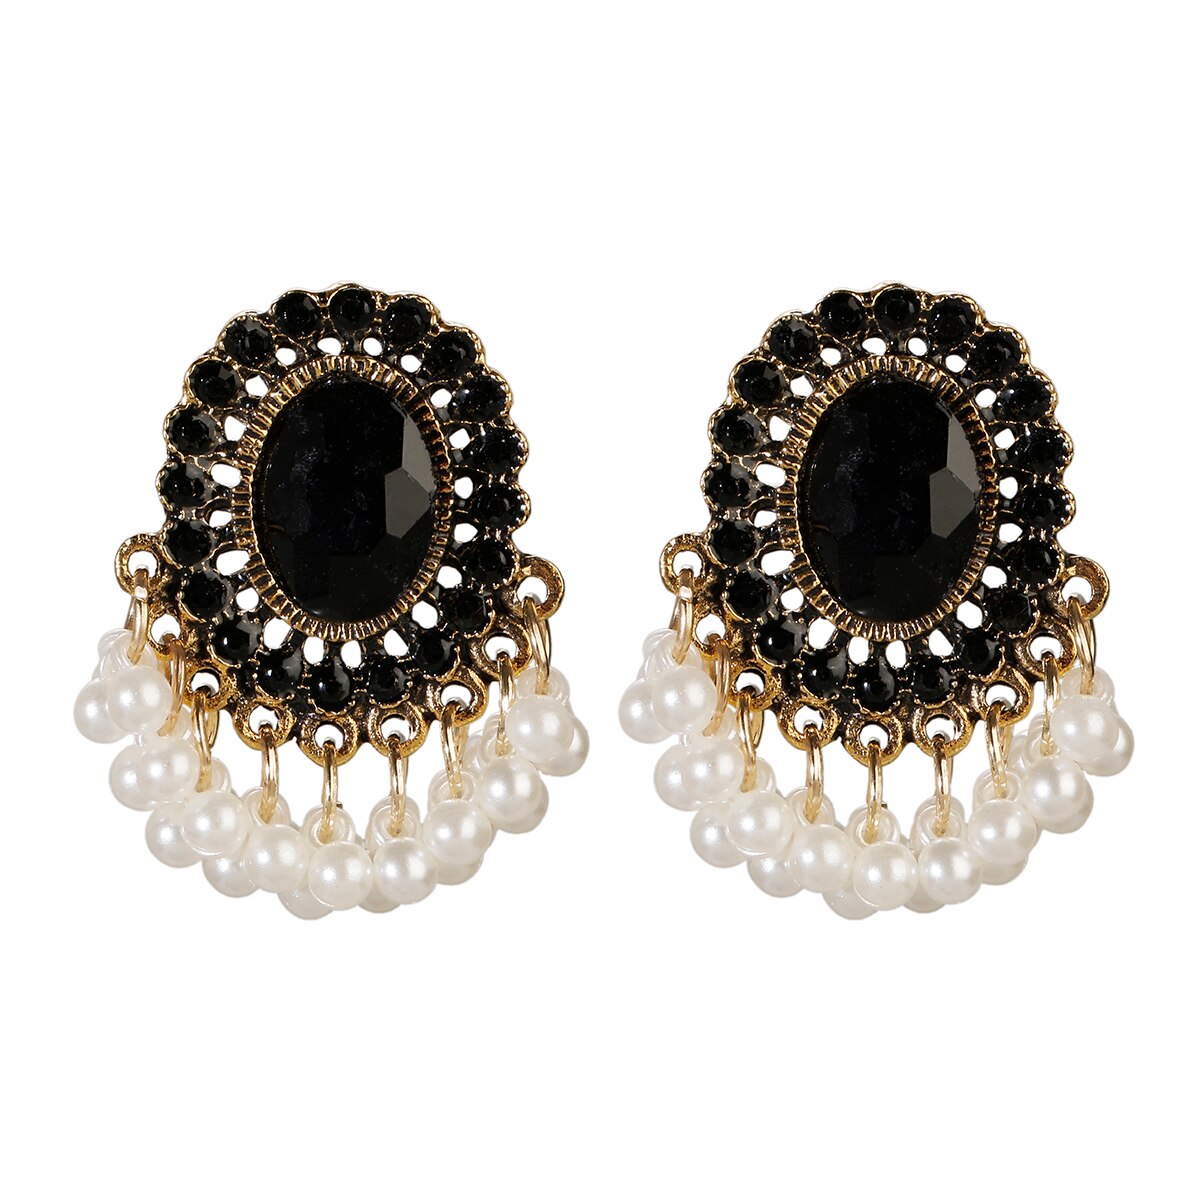 Classic-Blue-Crystal-Indian-Earrings-For-Women-Pendientes-Luxury-Pearl-Tassel-Earrings-Jewelry-Brinc-1005003753178643-6